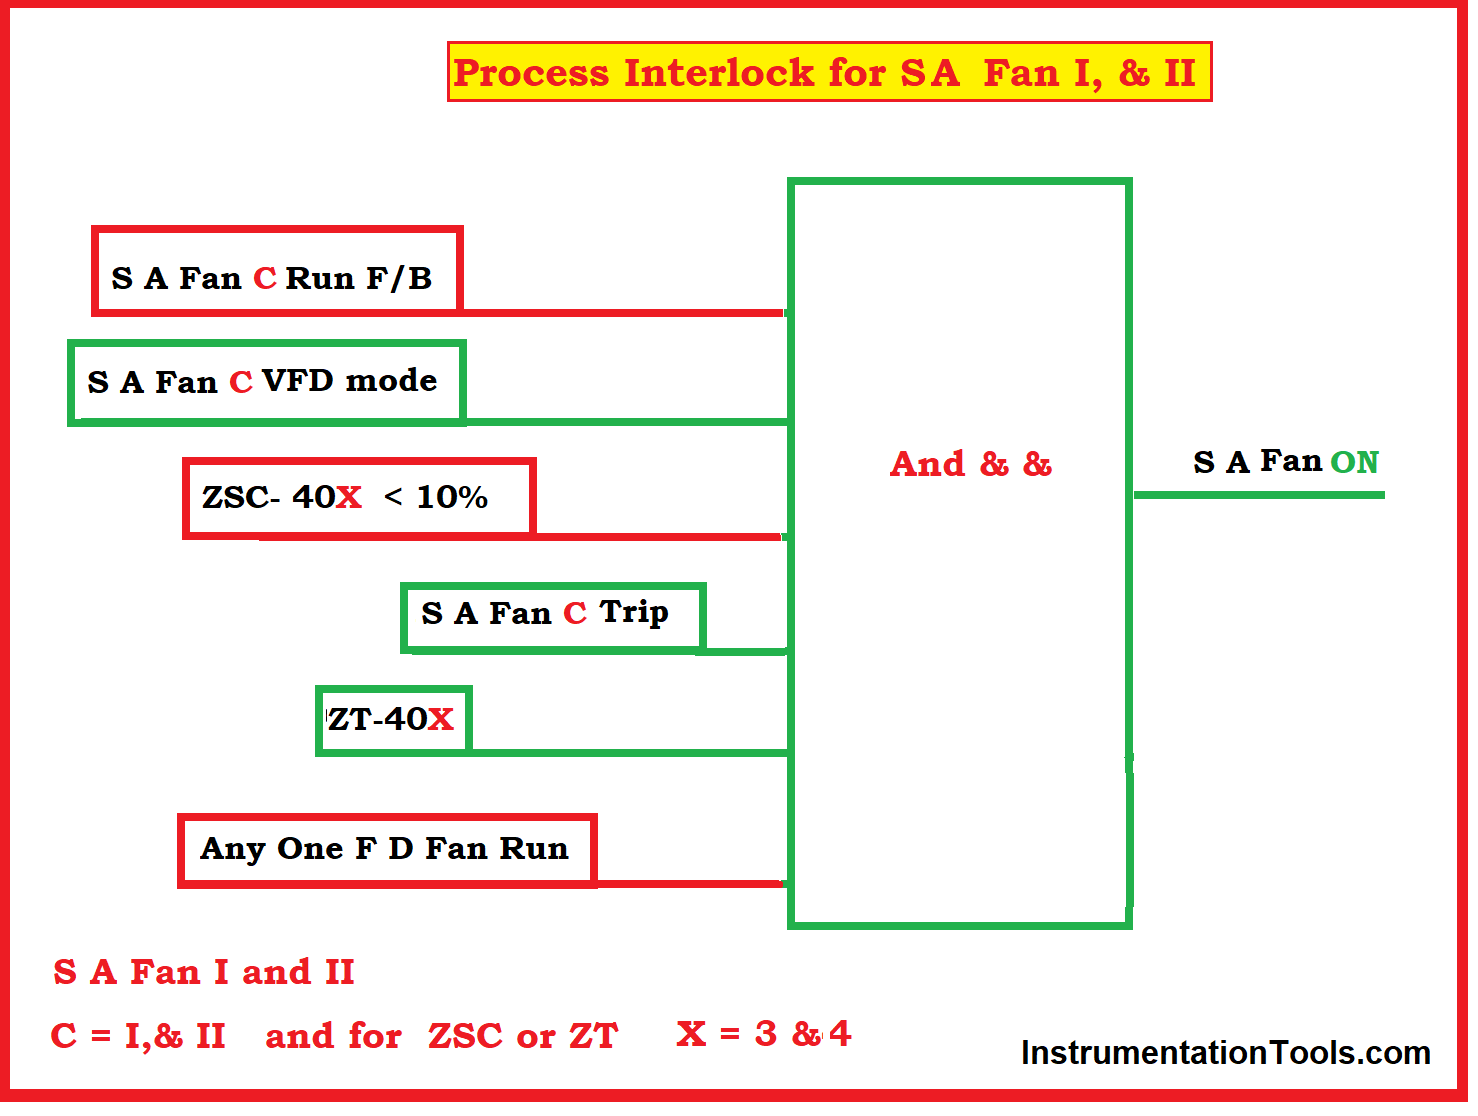 Power Plant Process Interlock for SA Fan I, & II